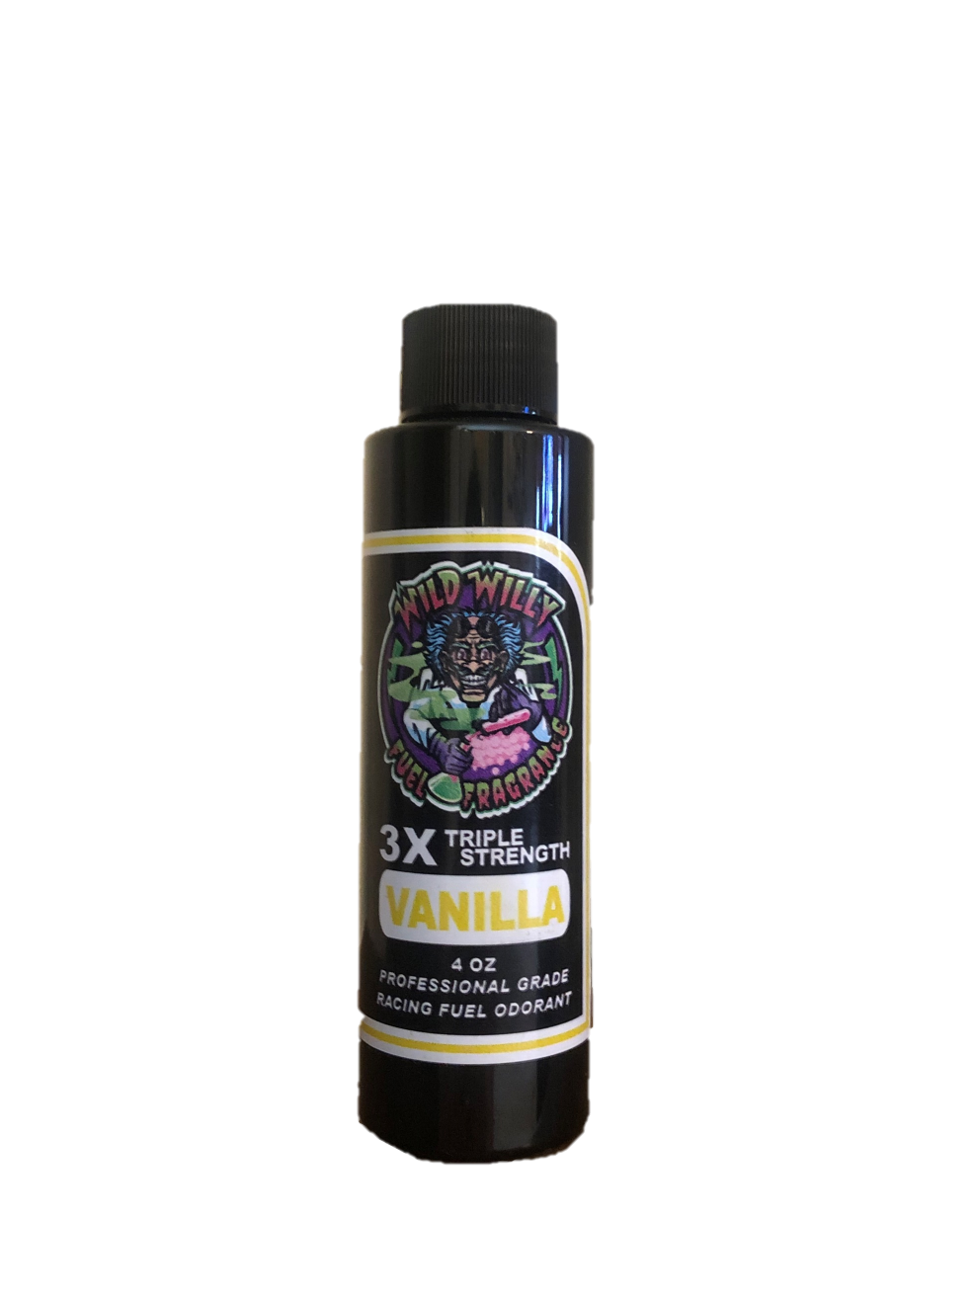 Vanilla - Wild Willy Fuel Fragrance - 3X Triple Strength!